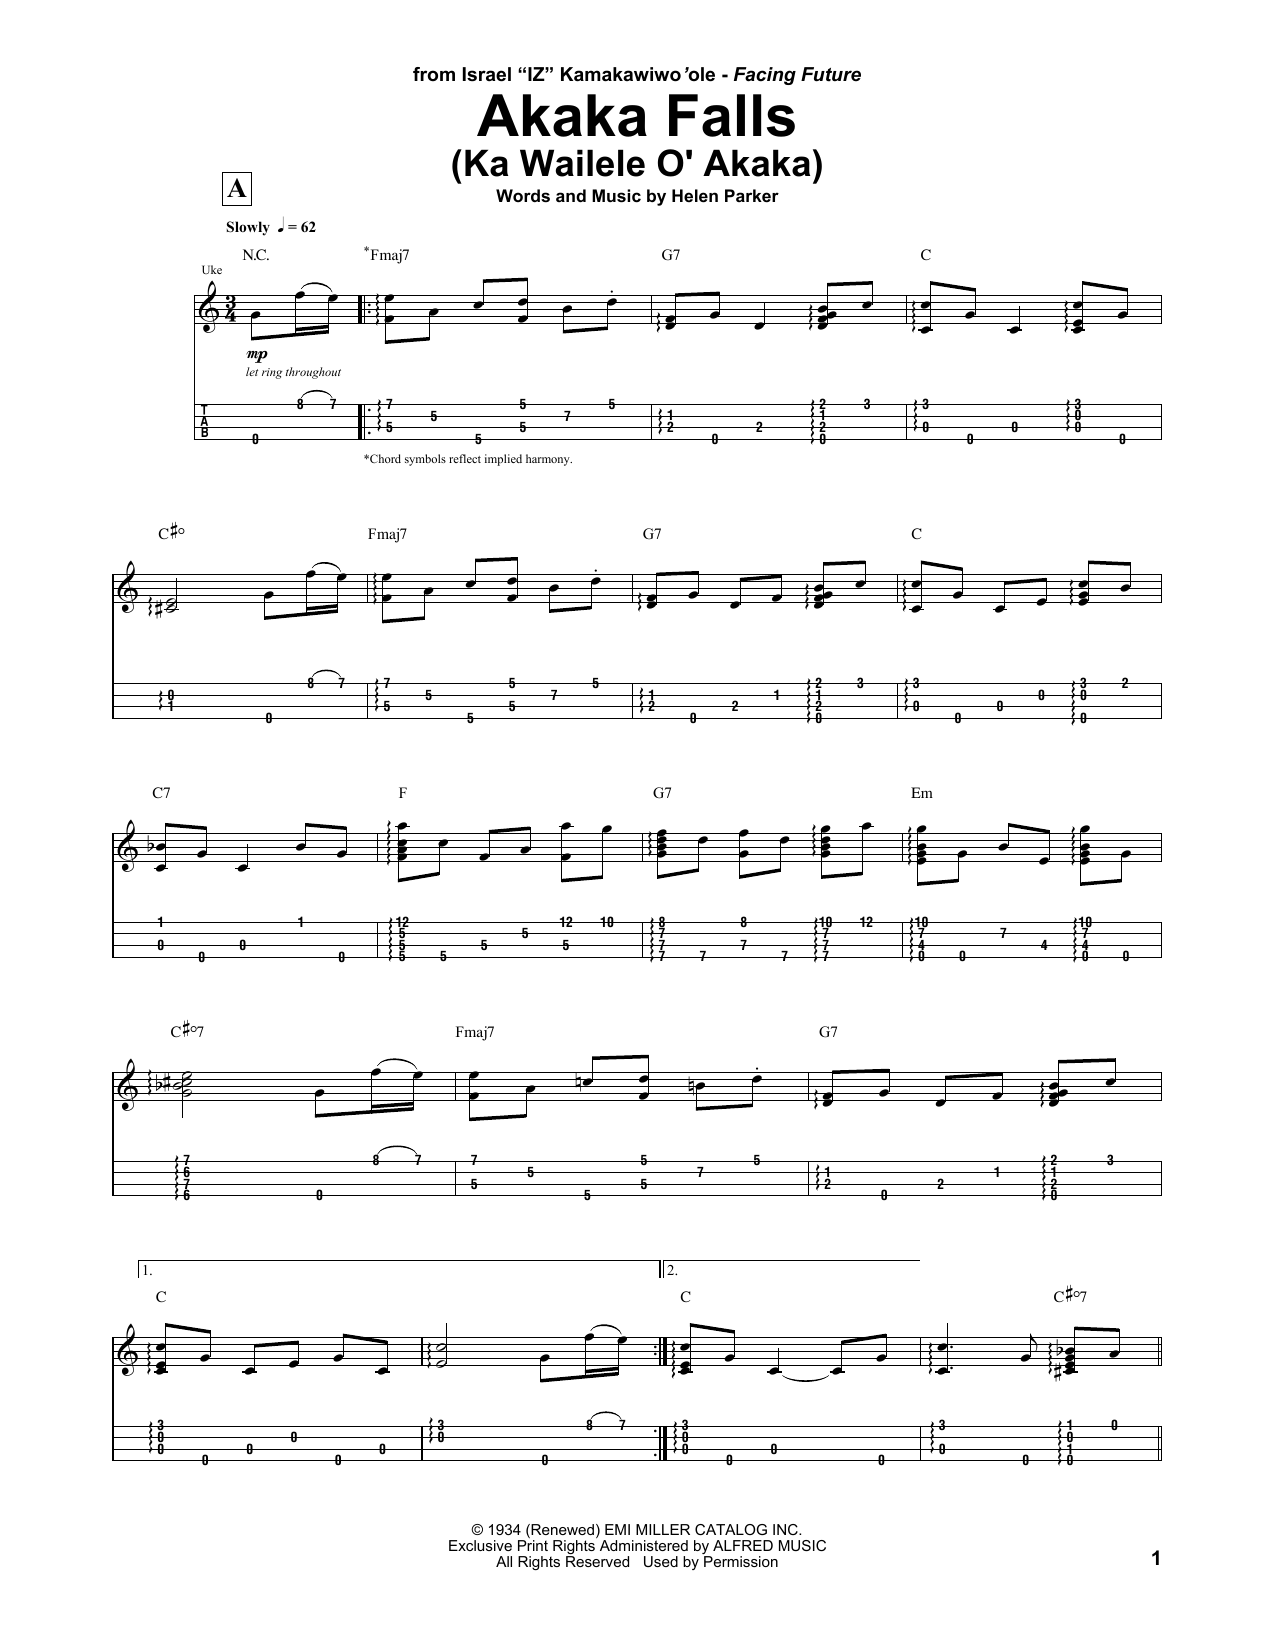 Download Jake Shimabukuro Akaka Falls (Ka Wailele O' Akaka) Sheet Music and learn how to play UKETAB PDF digital score in minutes